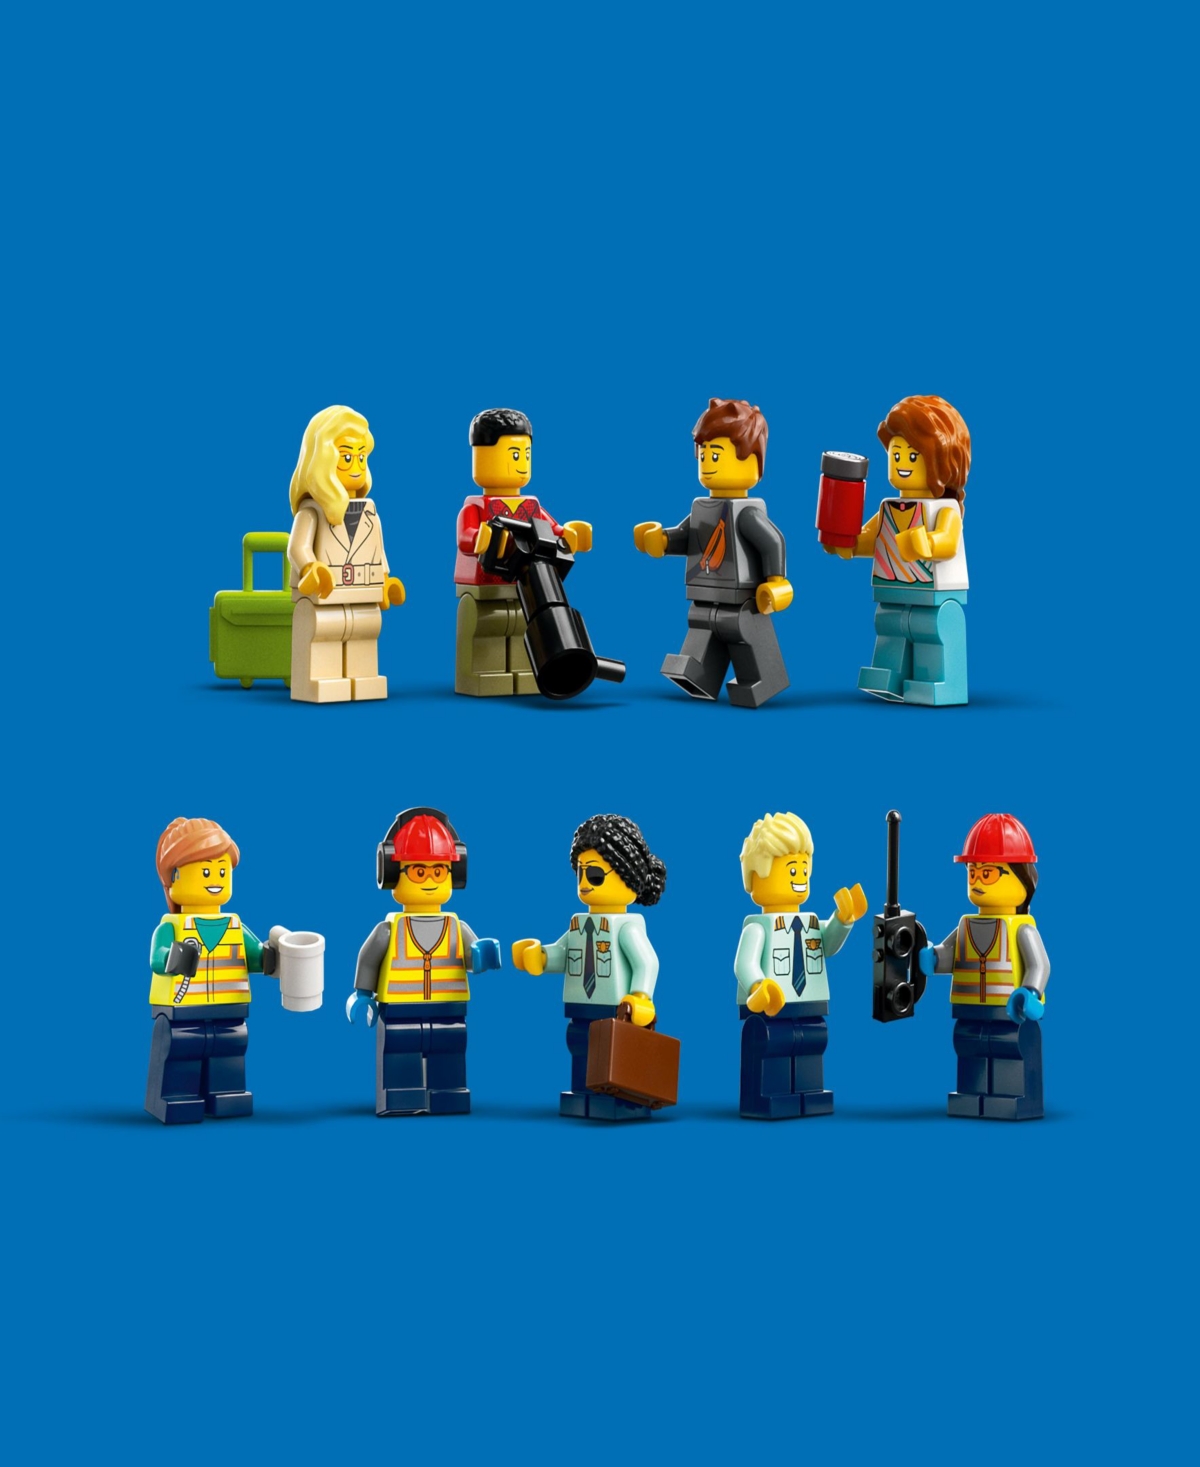 Shop Lego City Passenger Airplane Stem Building Toy 60367, 913 Pieces In Multicolor